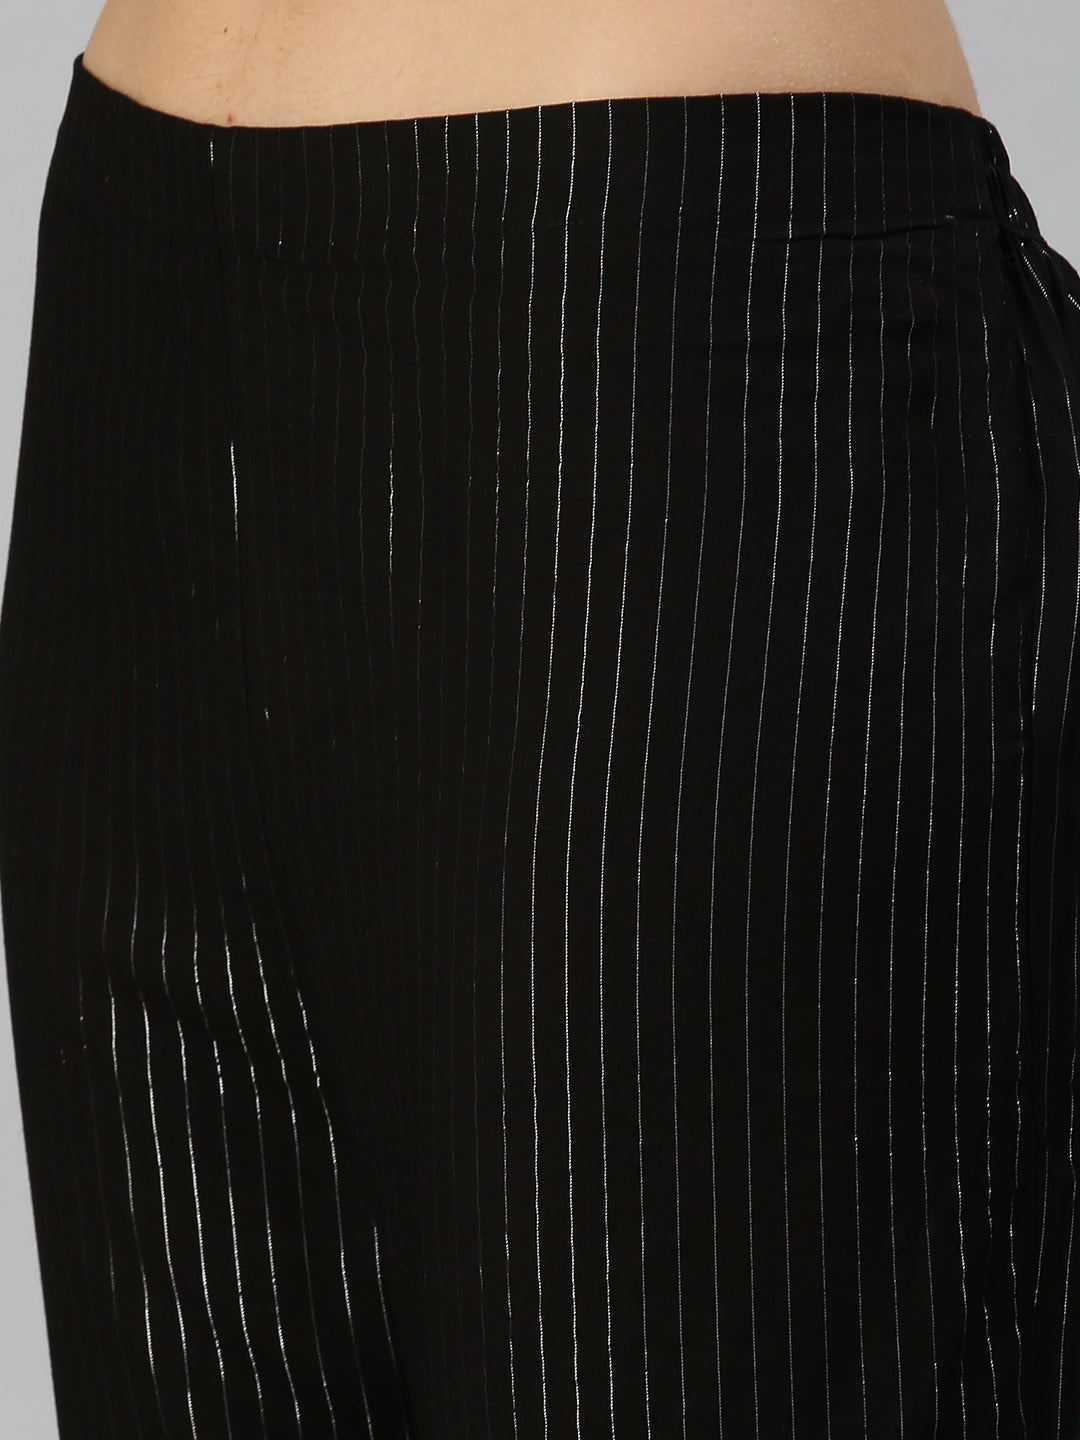 Women's Grey Striped Kurta Sets